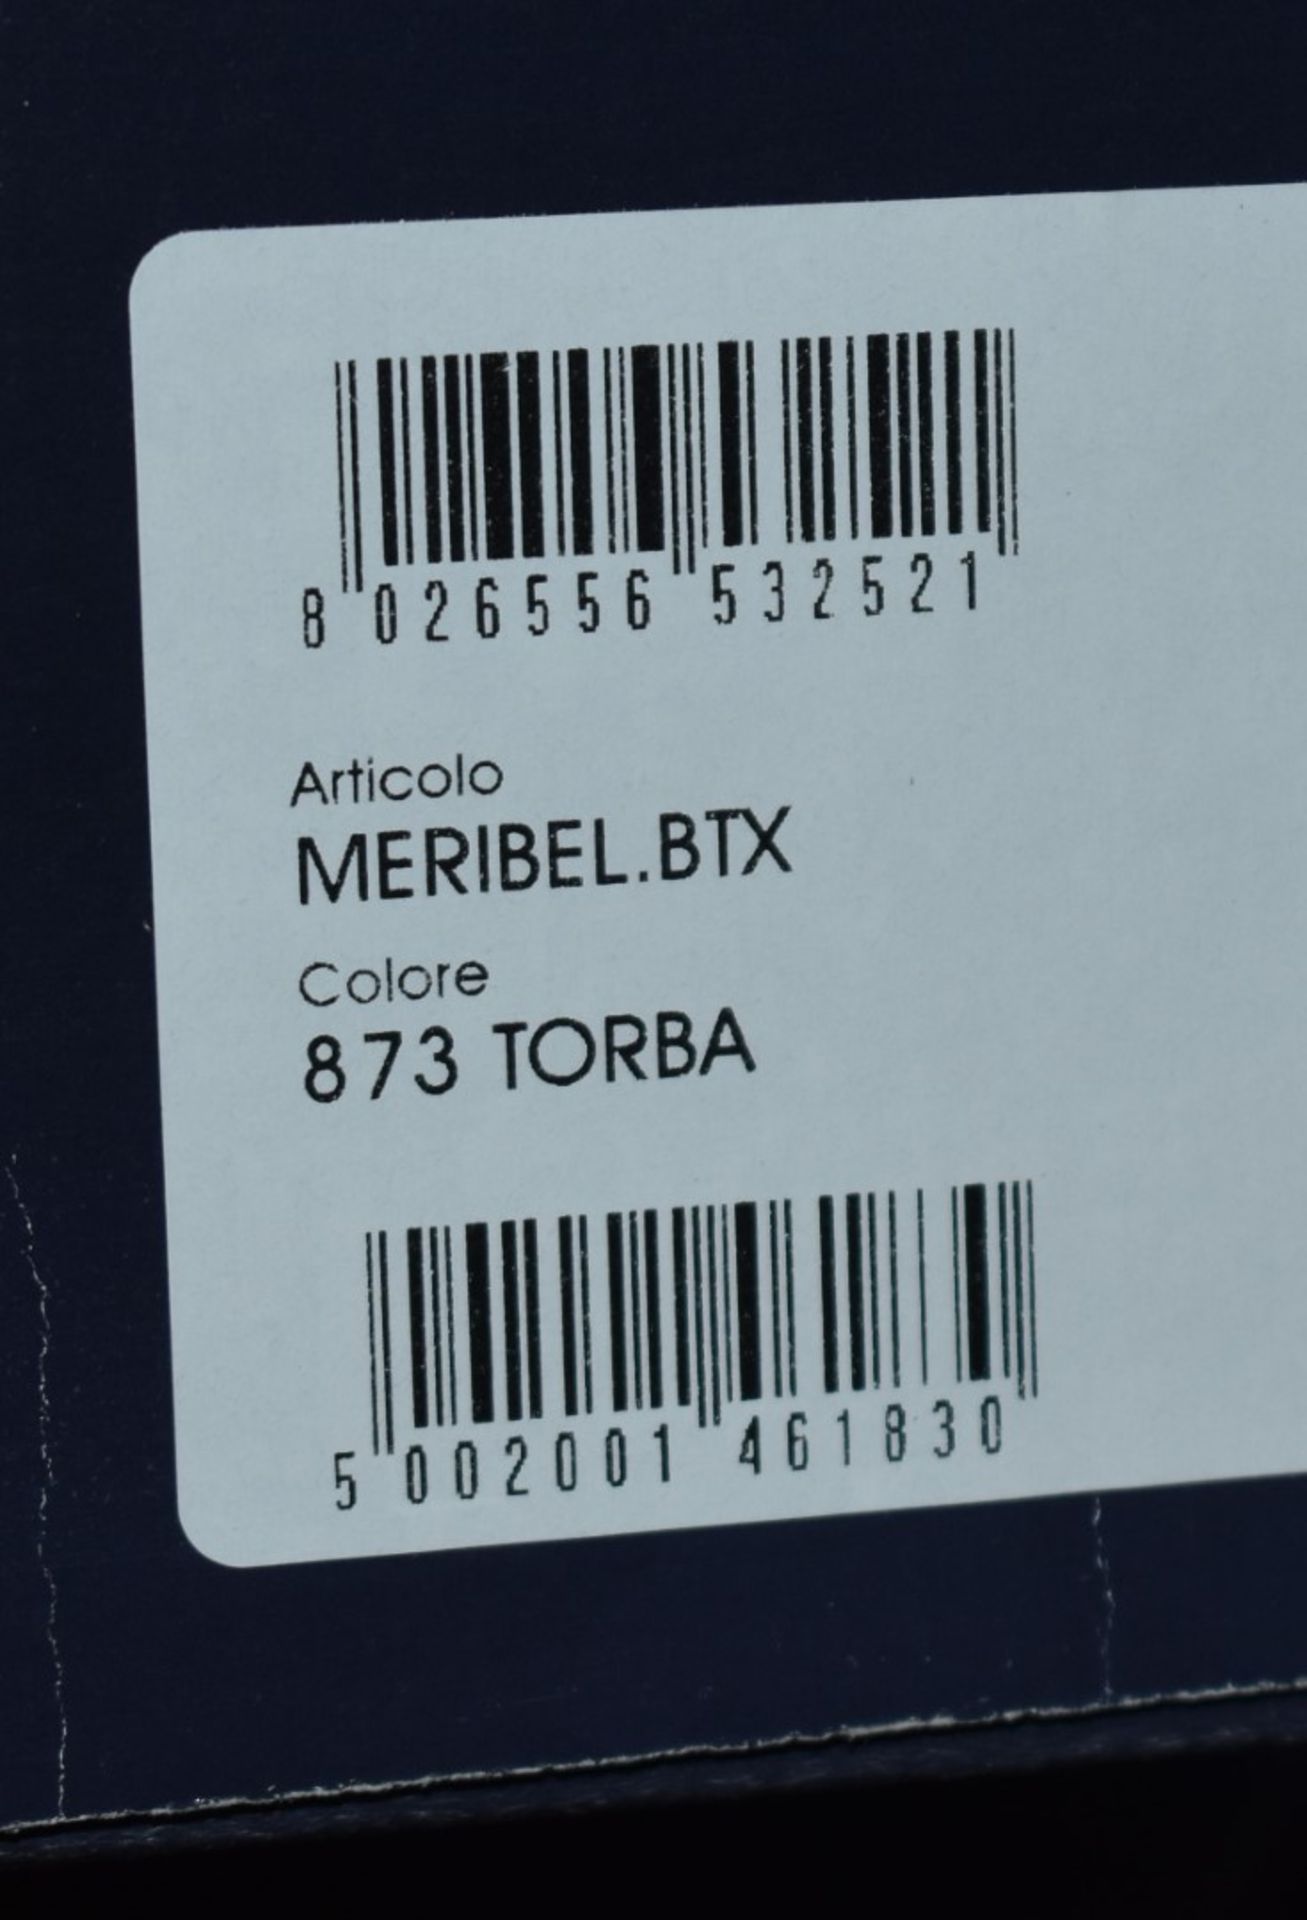 1 x Pair of Designer Olang Meribel 873 Torba Women's Winter Boots - Euro Size 40 - Brand New Boxed - Image 2 of 5